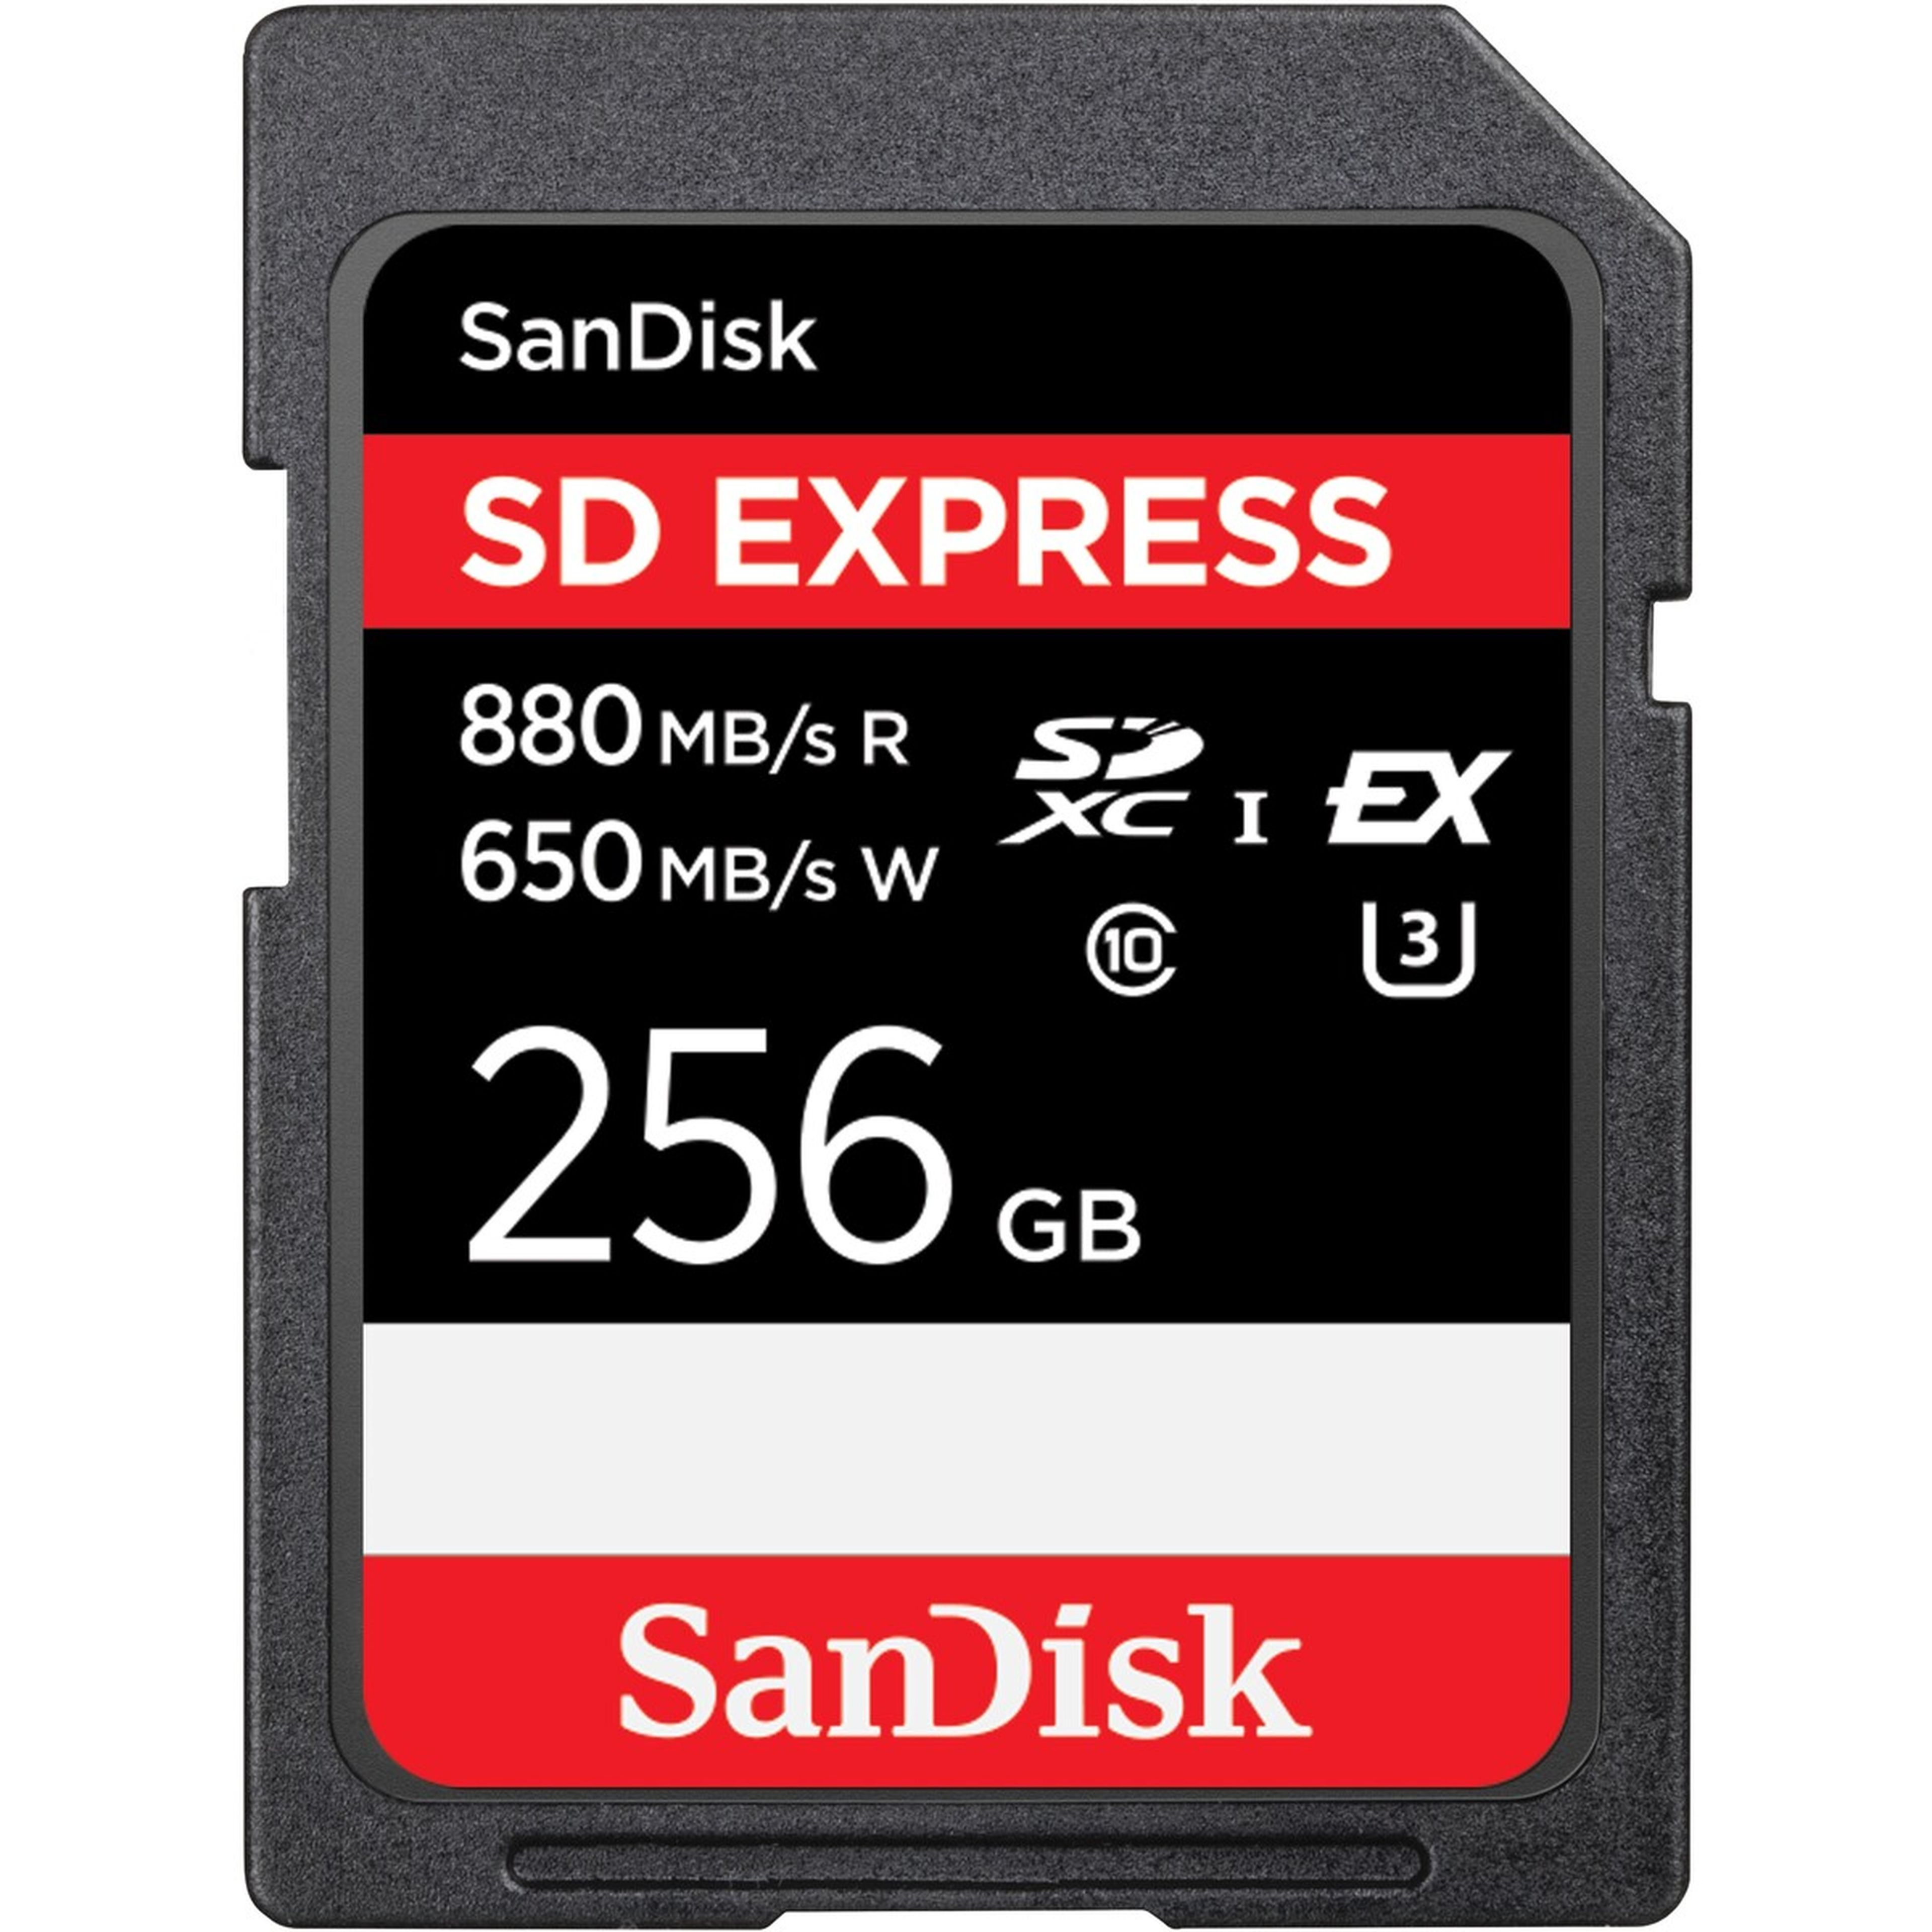 Sandisk SD Express